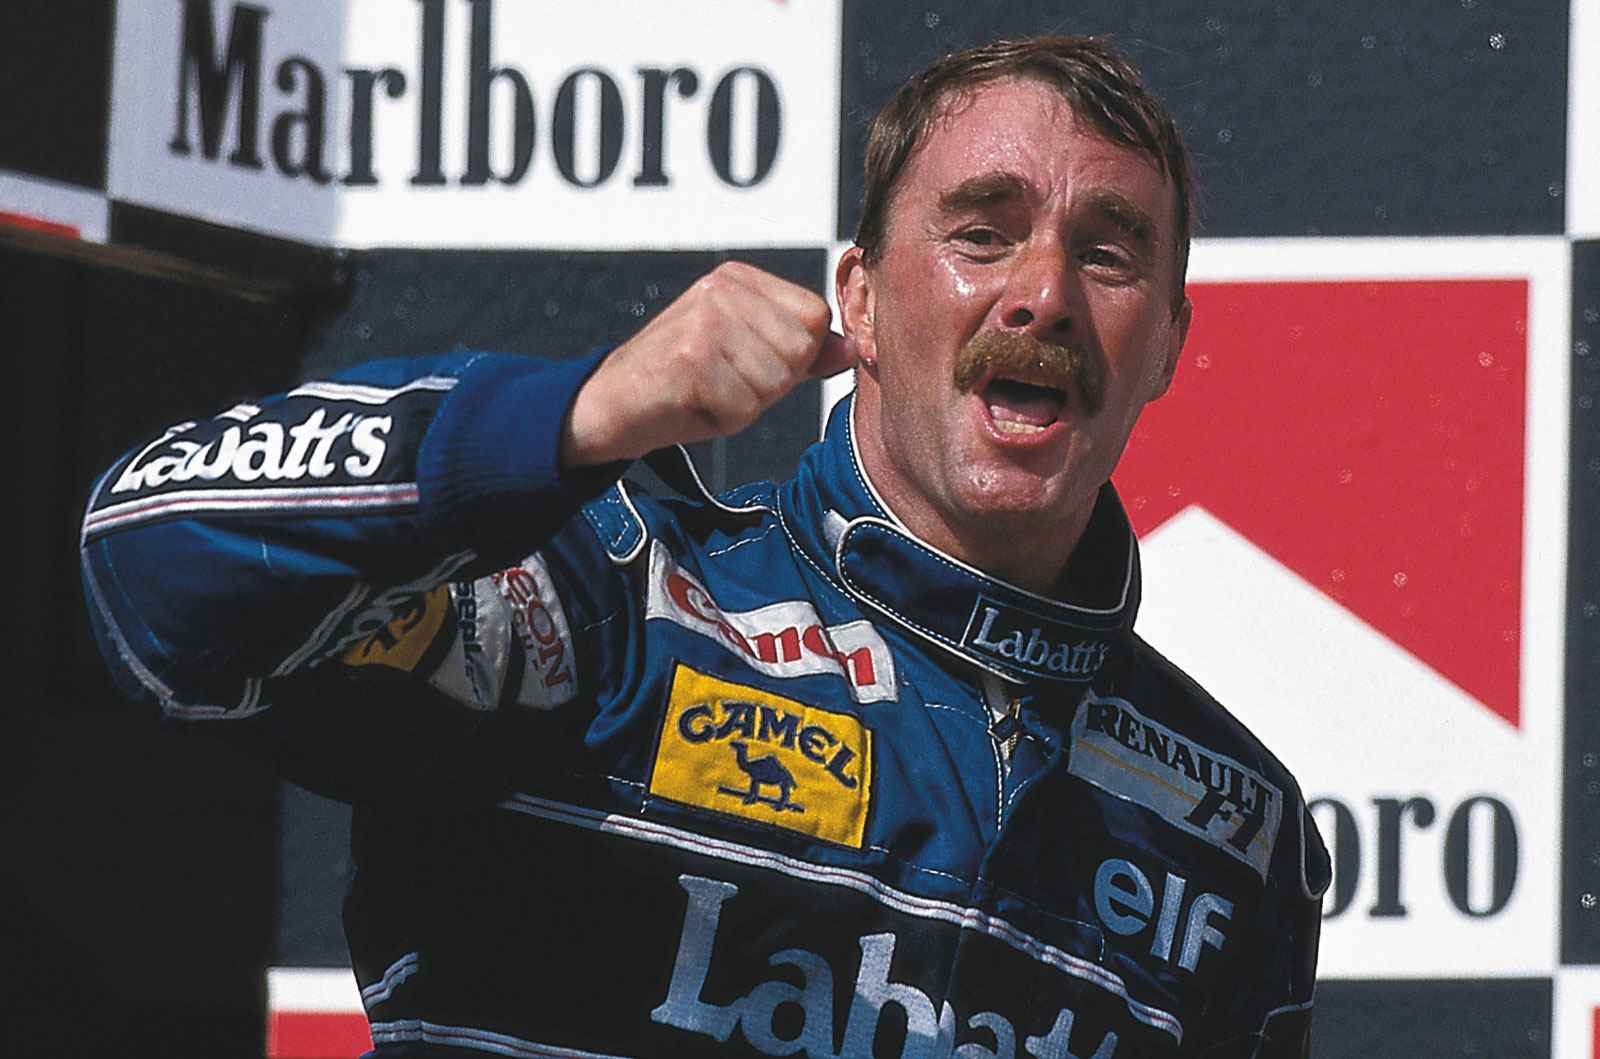 13º lugar: Nigel Mansell - 59 pódios.